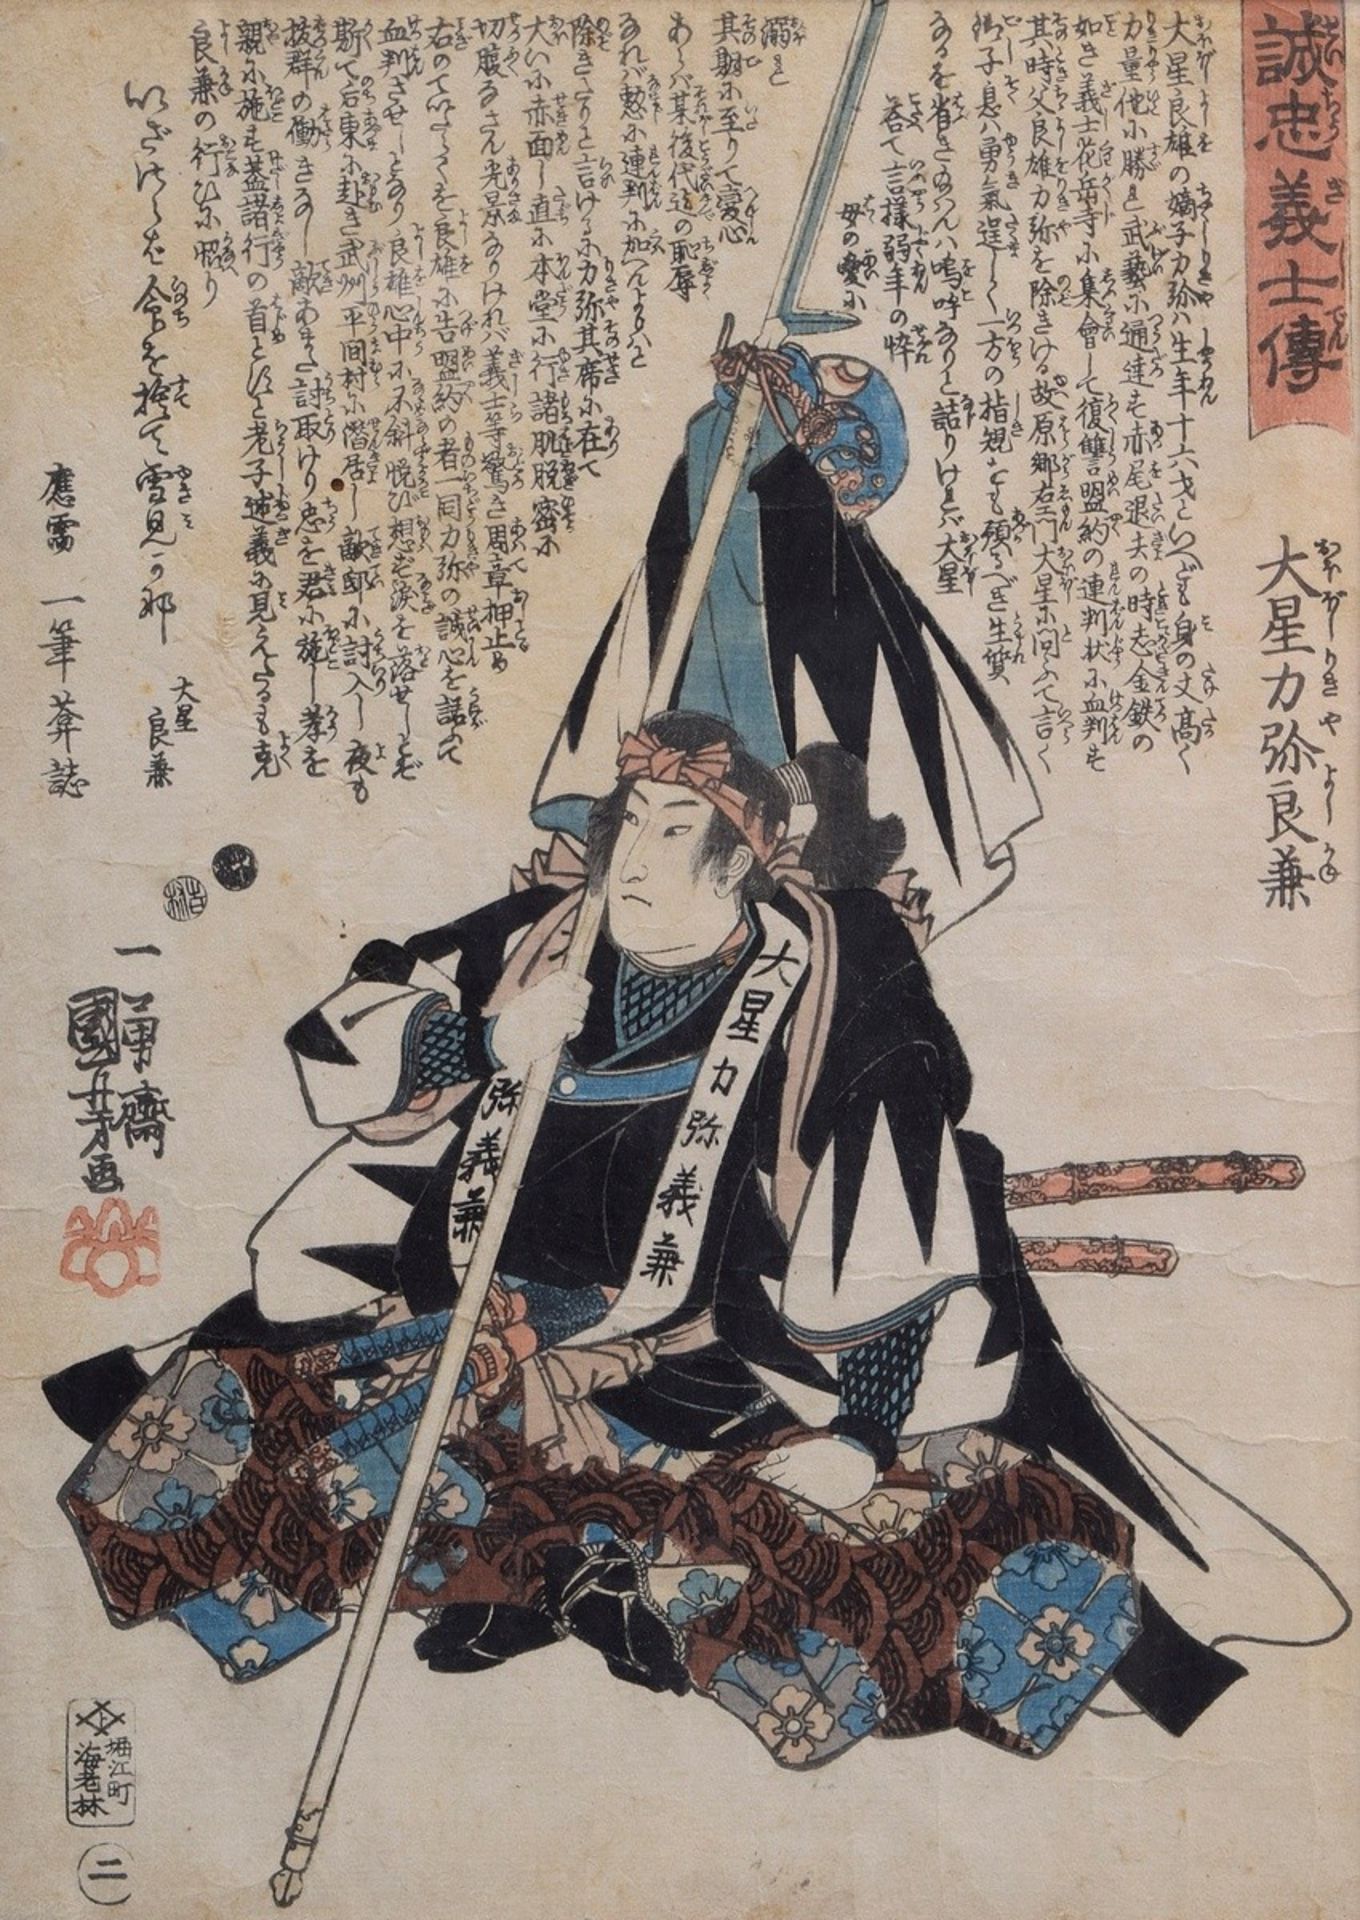 12 Kuniyoshi, Utagawa (1798-1861) Woodblock prints depicting samurai warriors from the series "Seic - Image 17 of 17